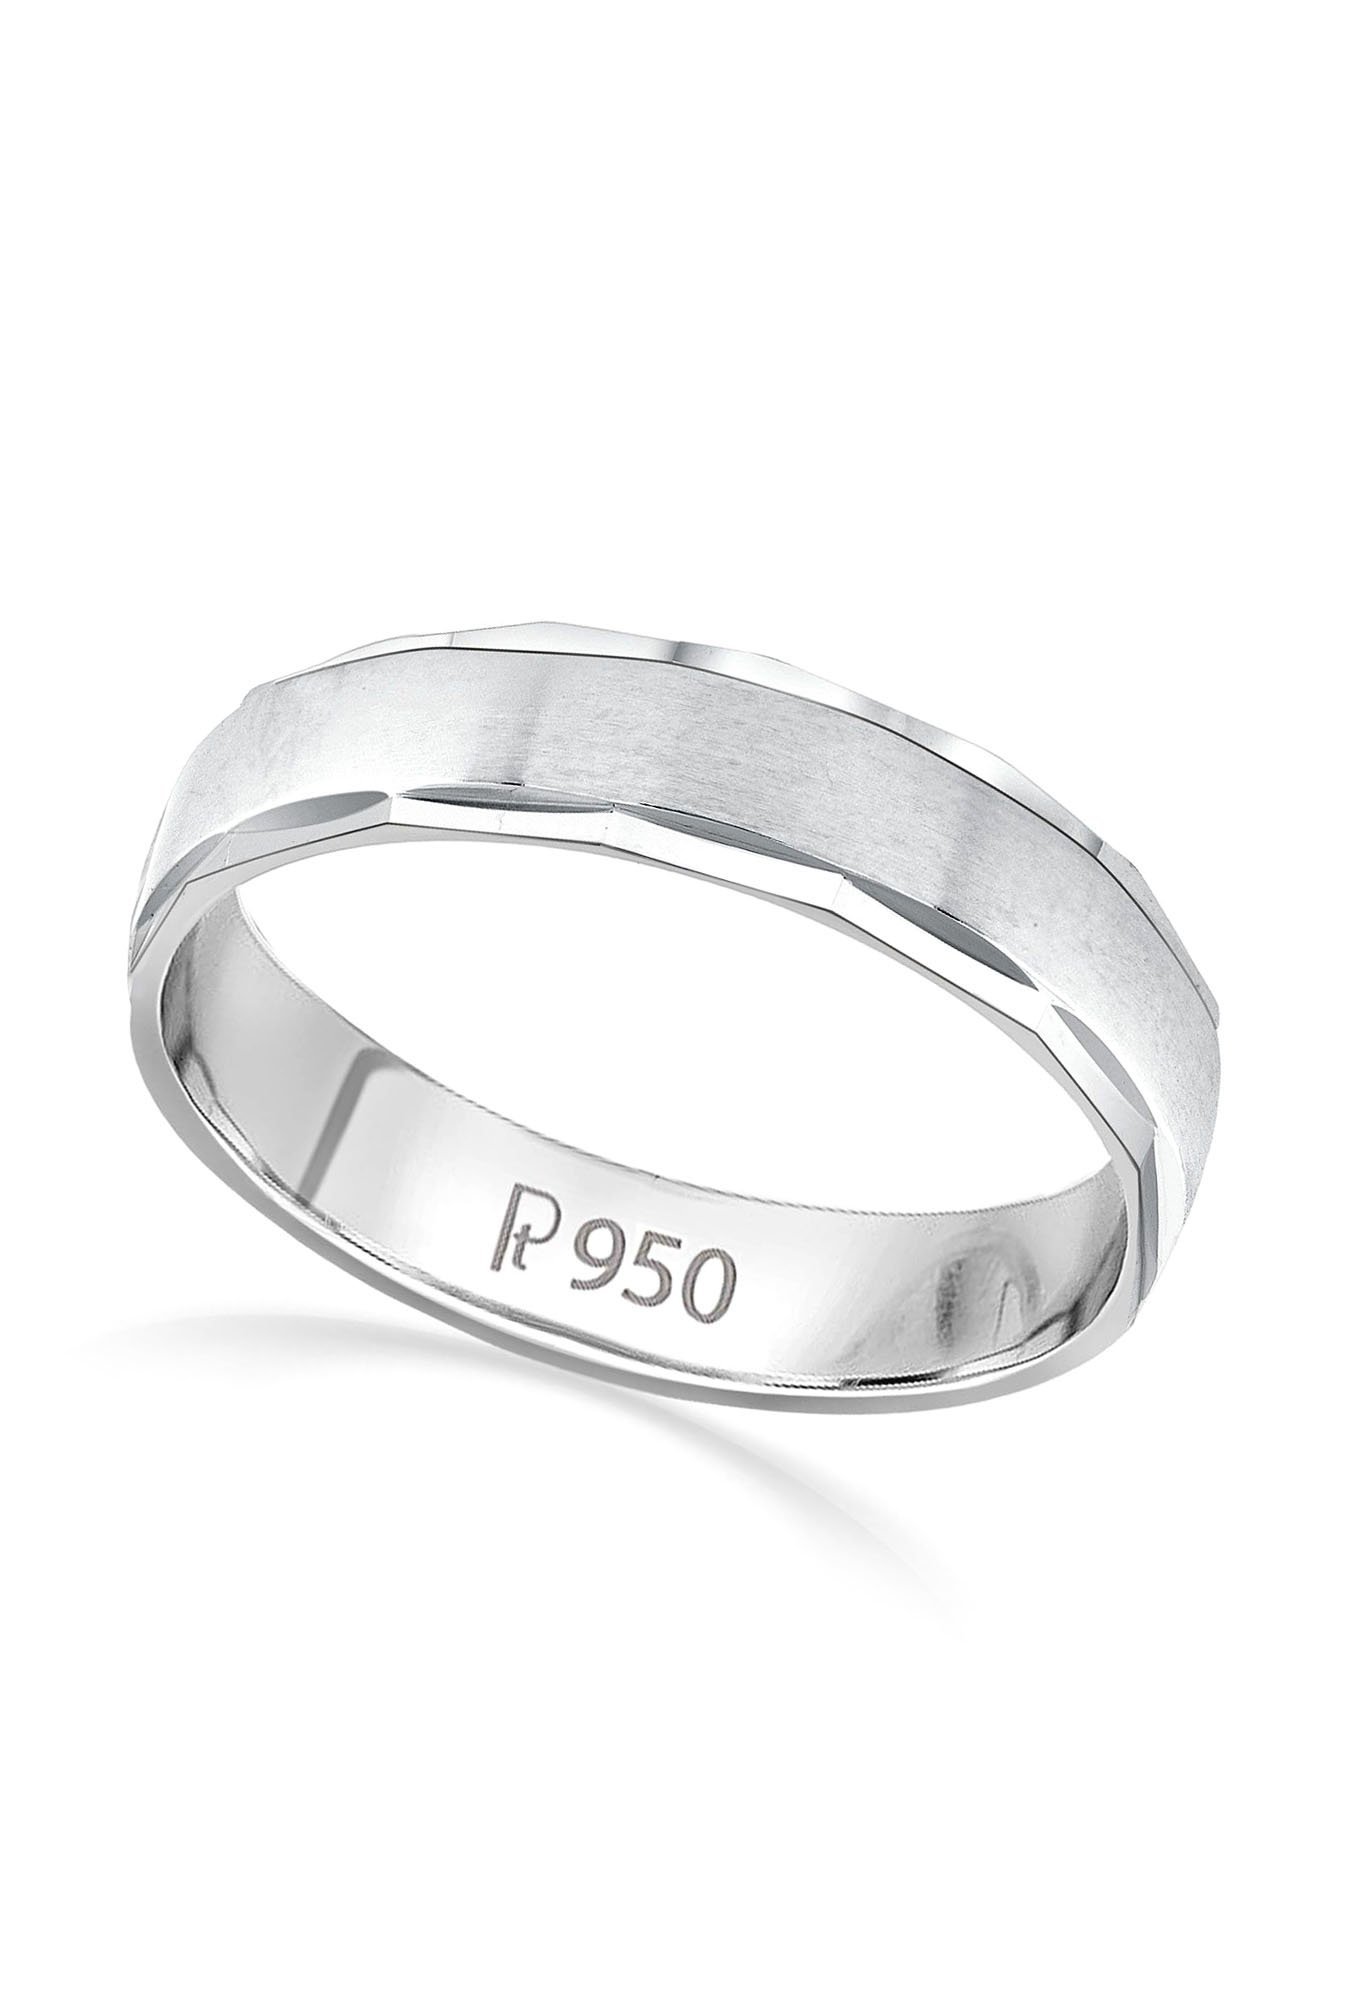 Buy Mine Platinum PT 950 White Purity Band Ring for Men Online